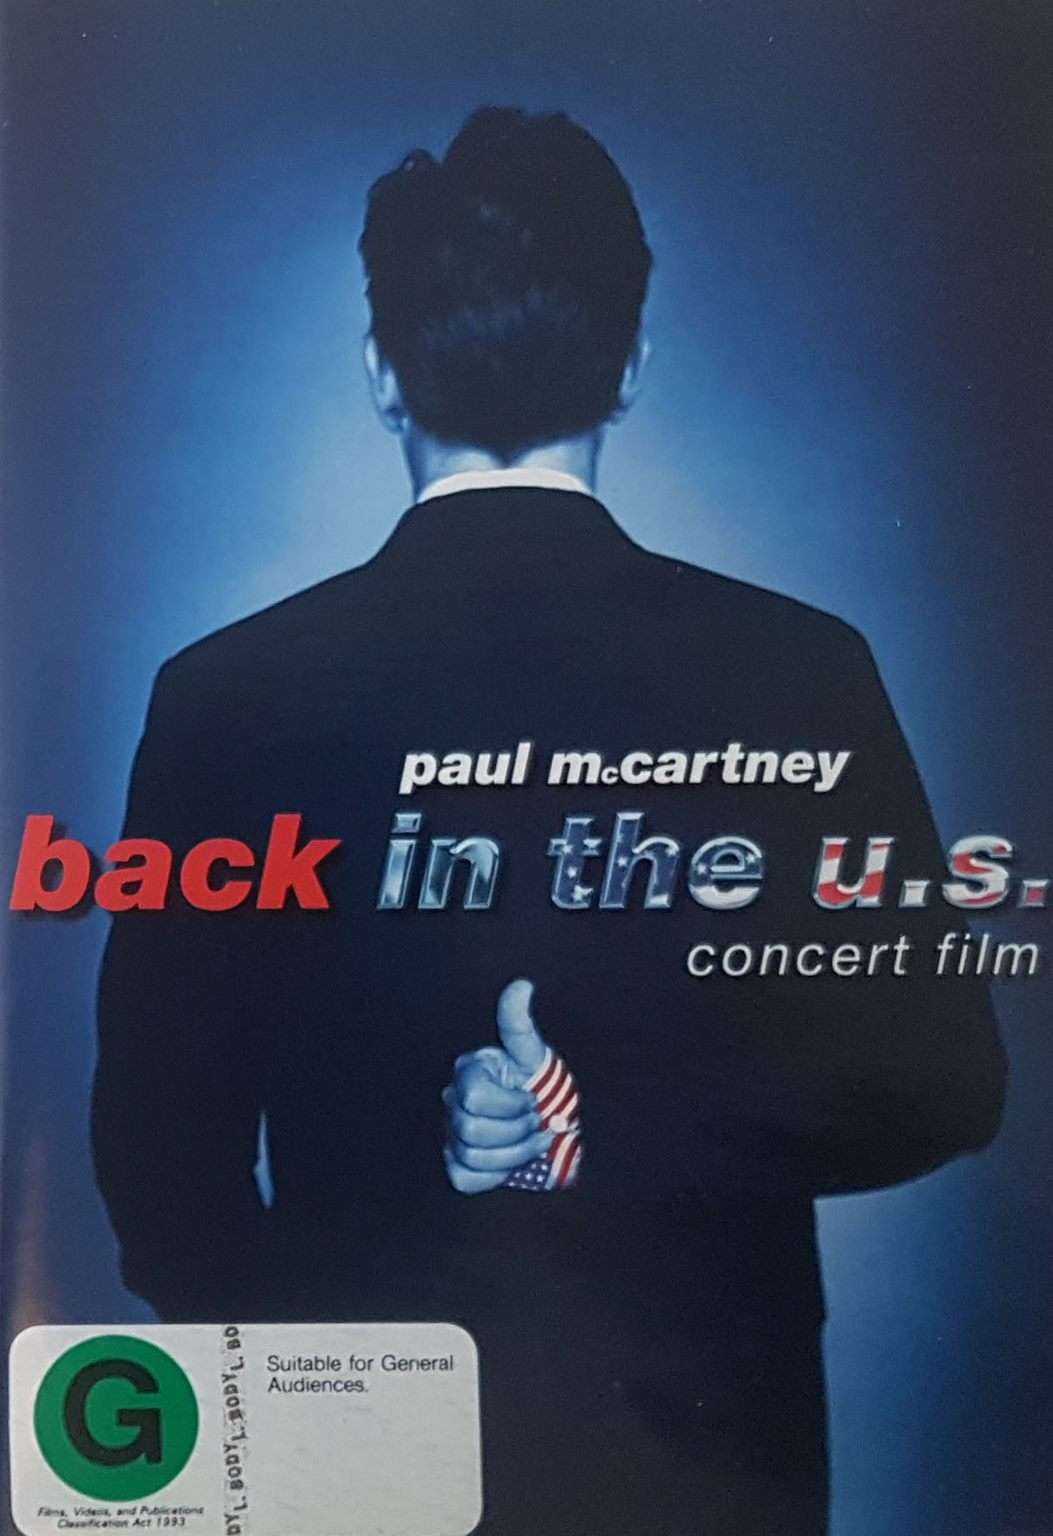 Paul McCartney Back in the U.S. Concert Film